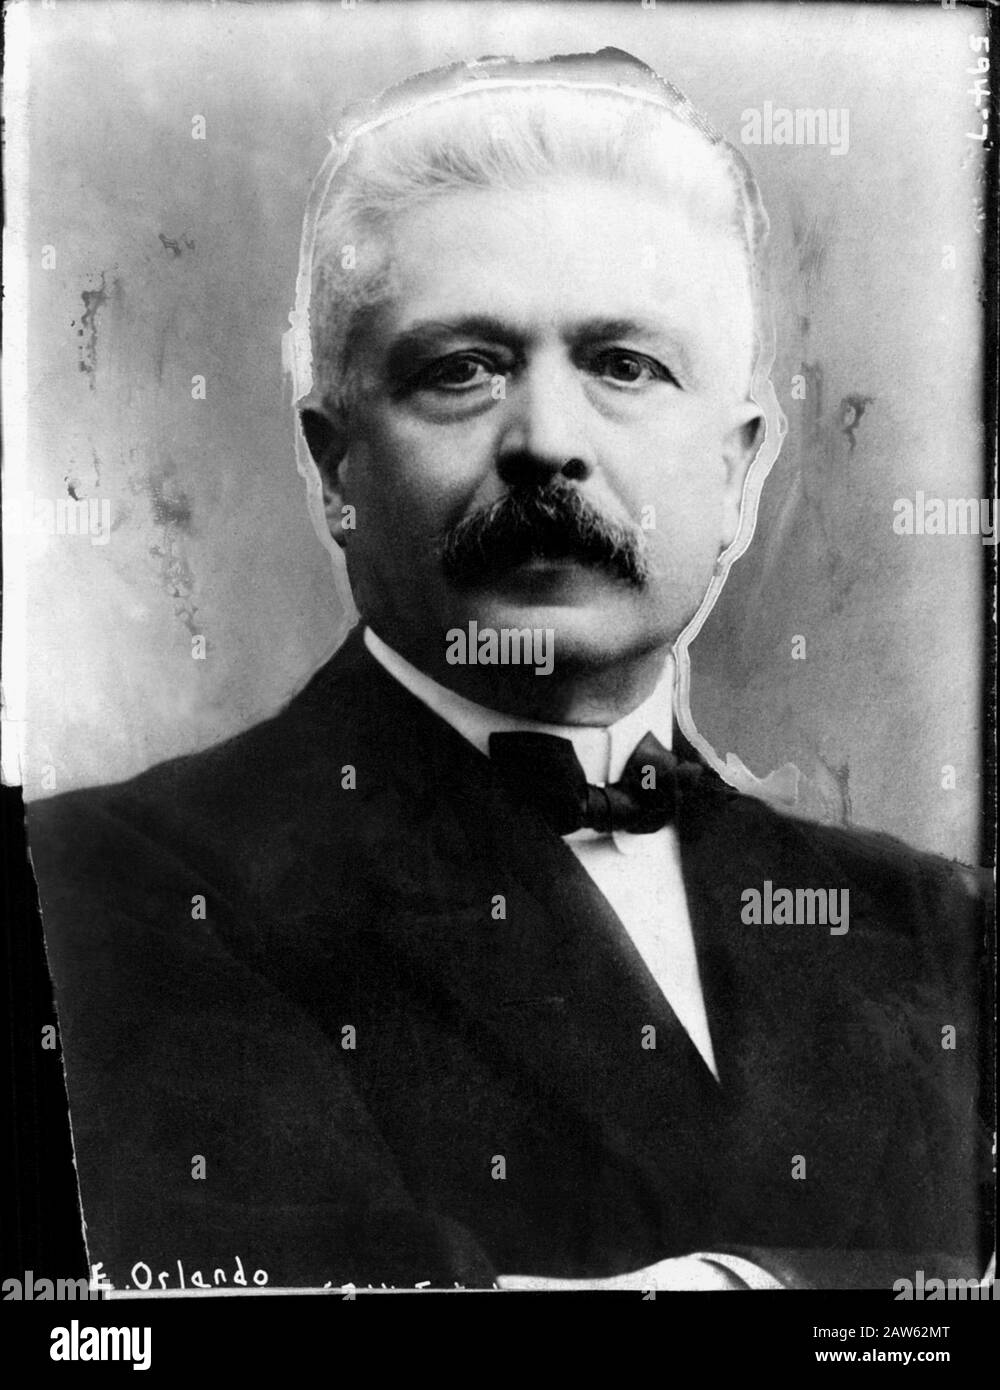 1918 , ITALY : The italian politician VITTORIO EMANUELE ORLANDO ( 1860 - 1952 ) , famous wartime WWI Premier of Italy . Orlando was one of the big fou Stock Photo